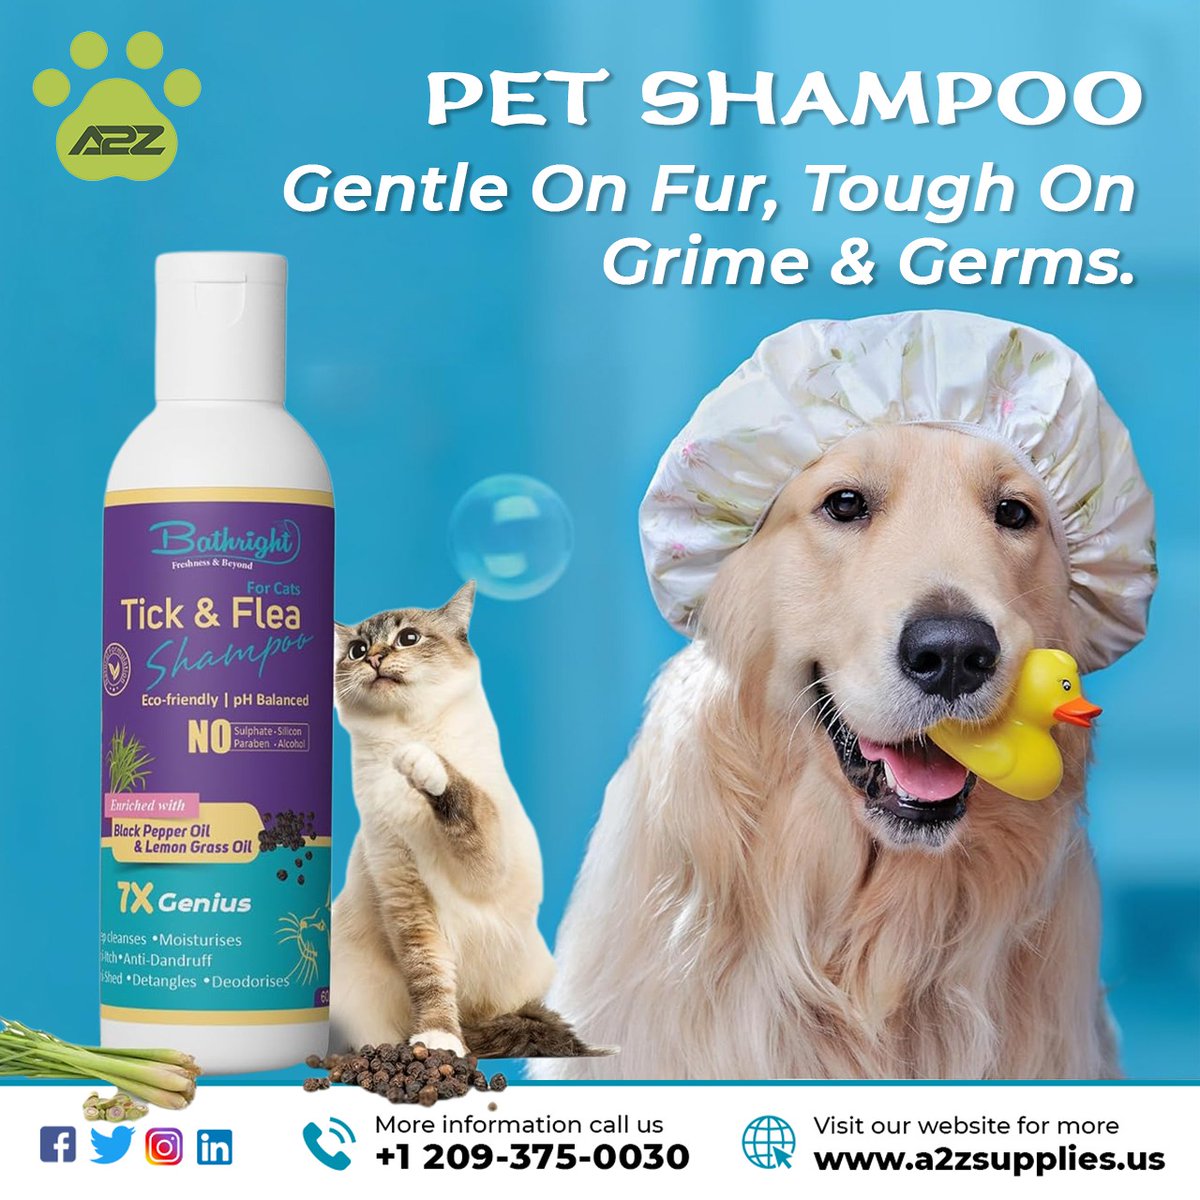 Pet Shampoo: Gentle On Fur, Tough On Grime & Germs.

#petshampoo #petcare #petsupplies